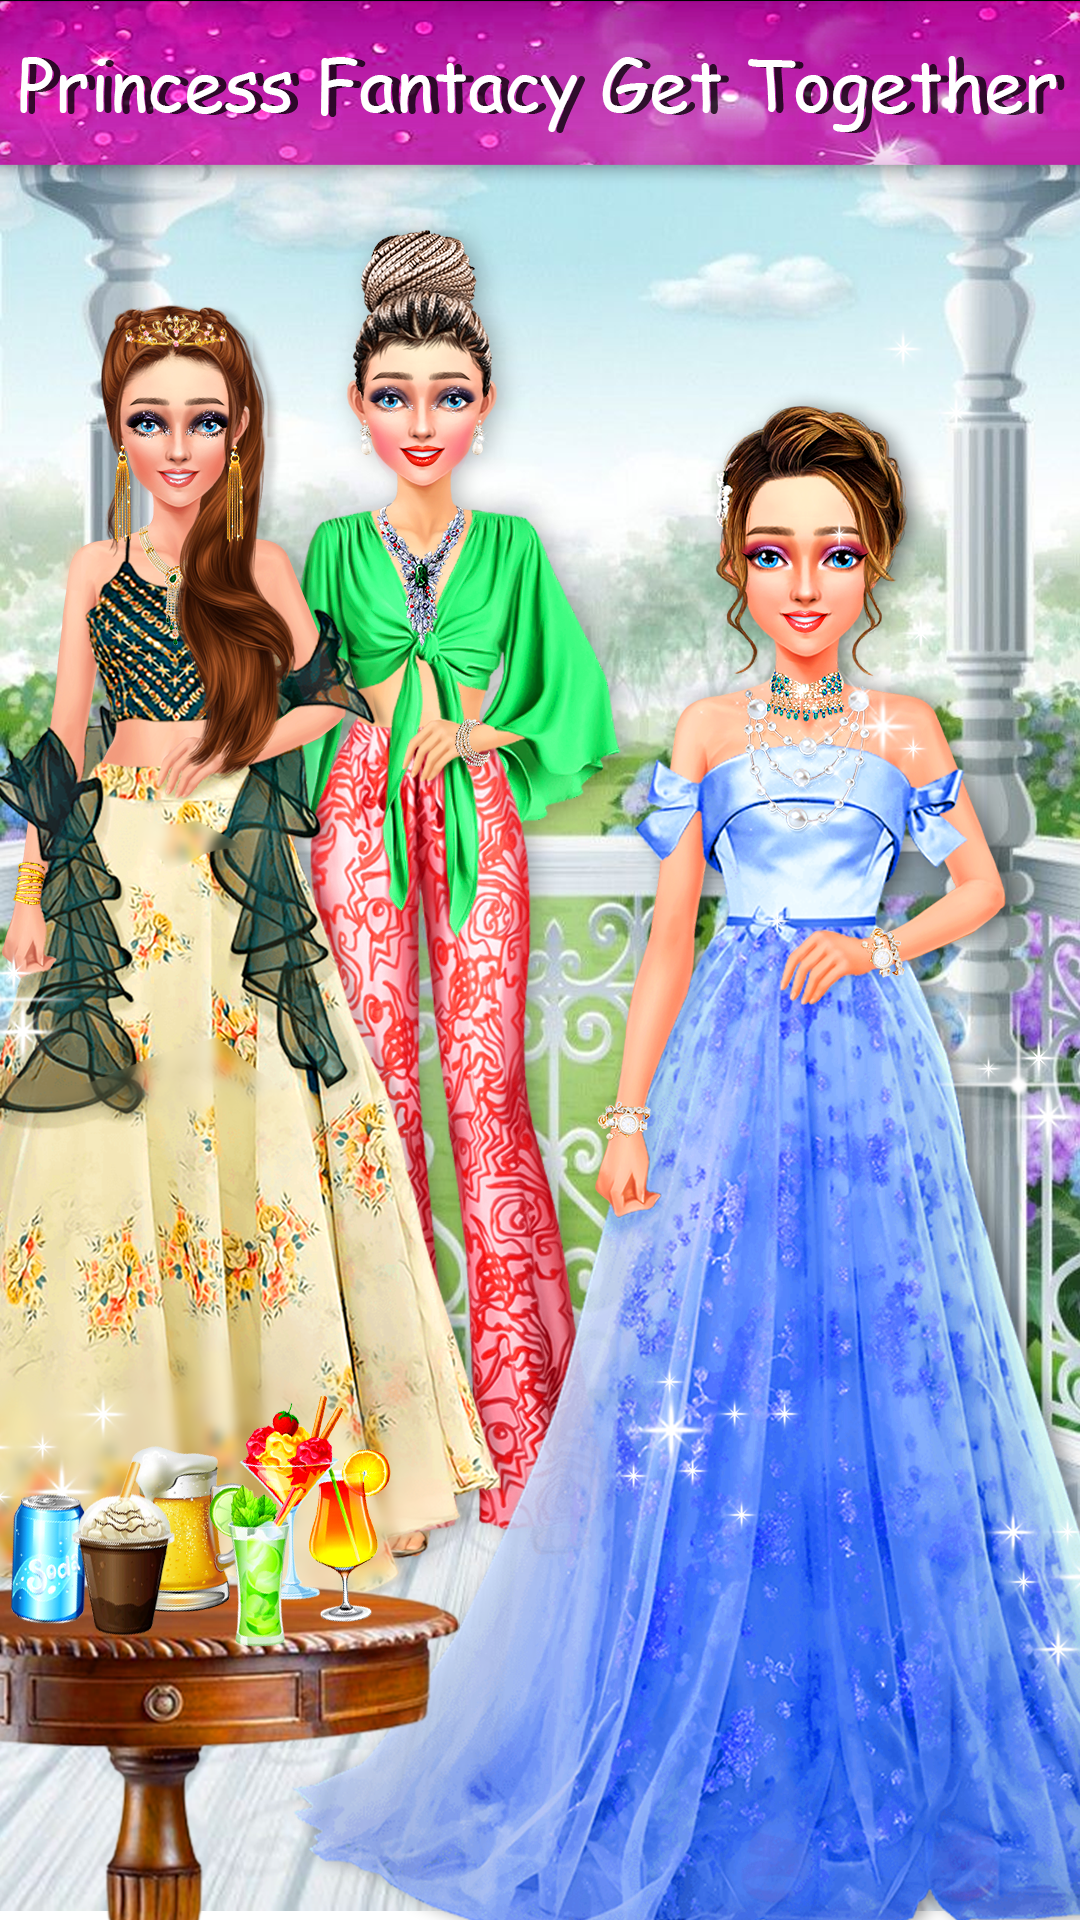 Princess Makeup Dress Up Game android iOS apk download for free-TapTap